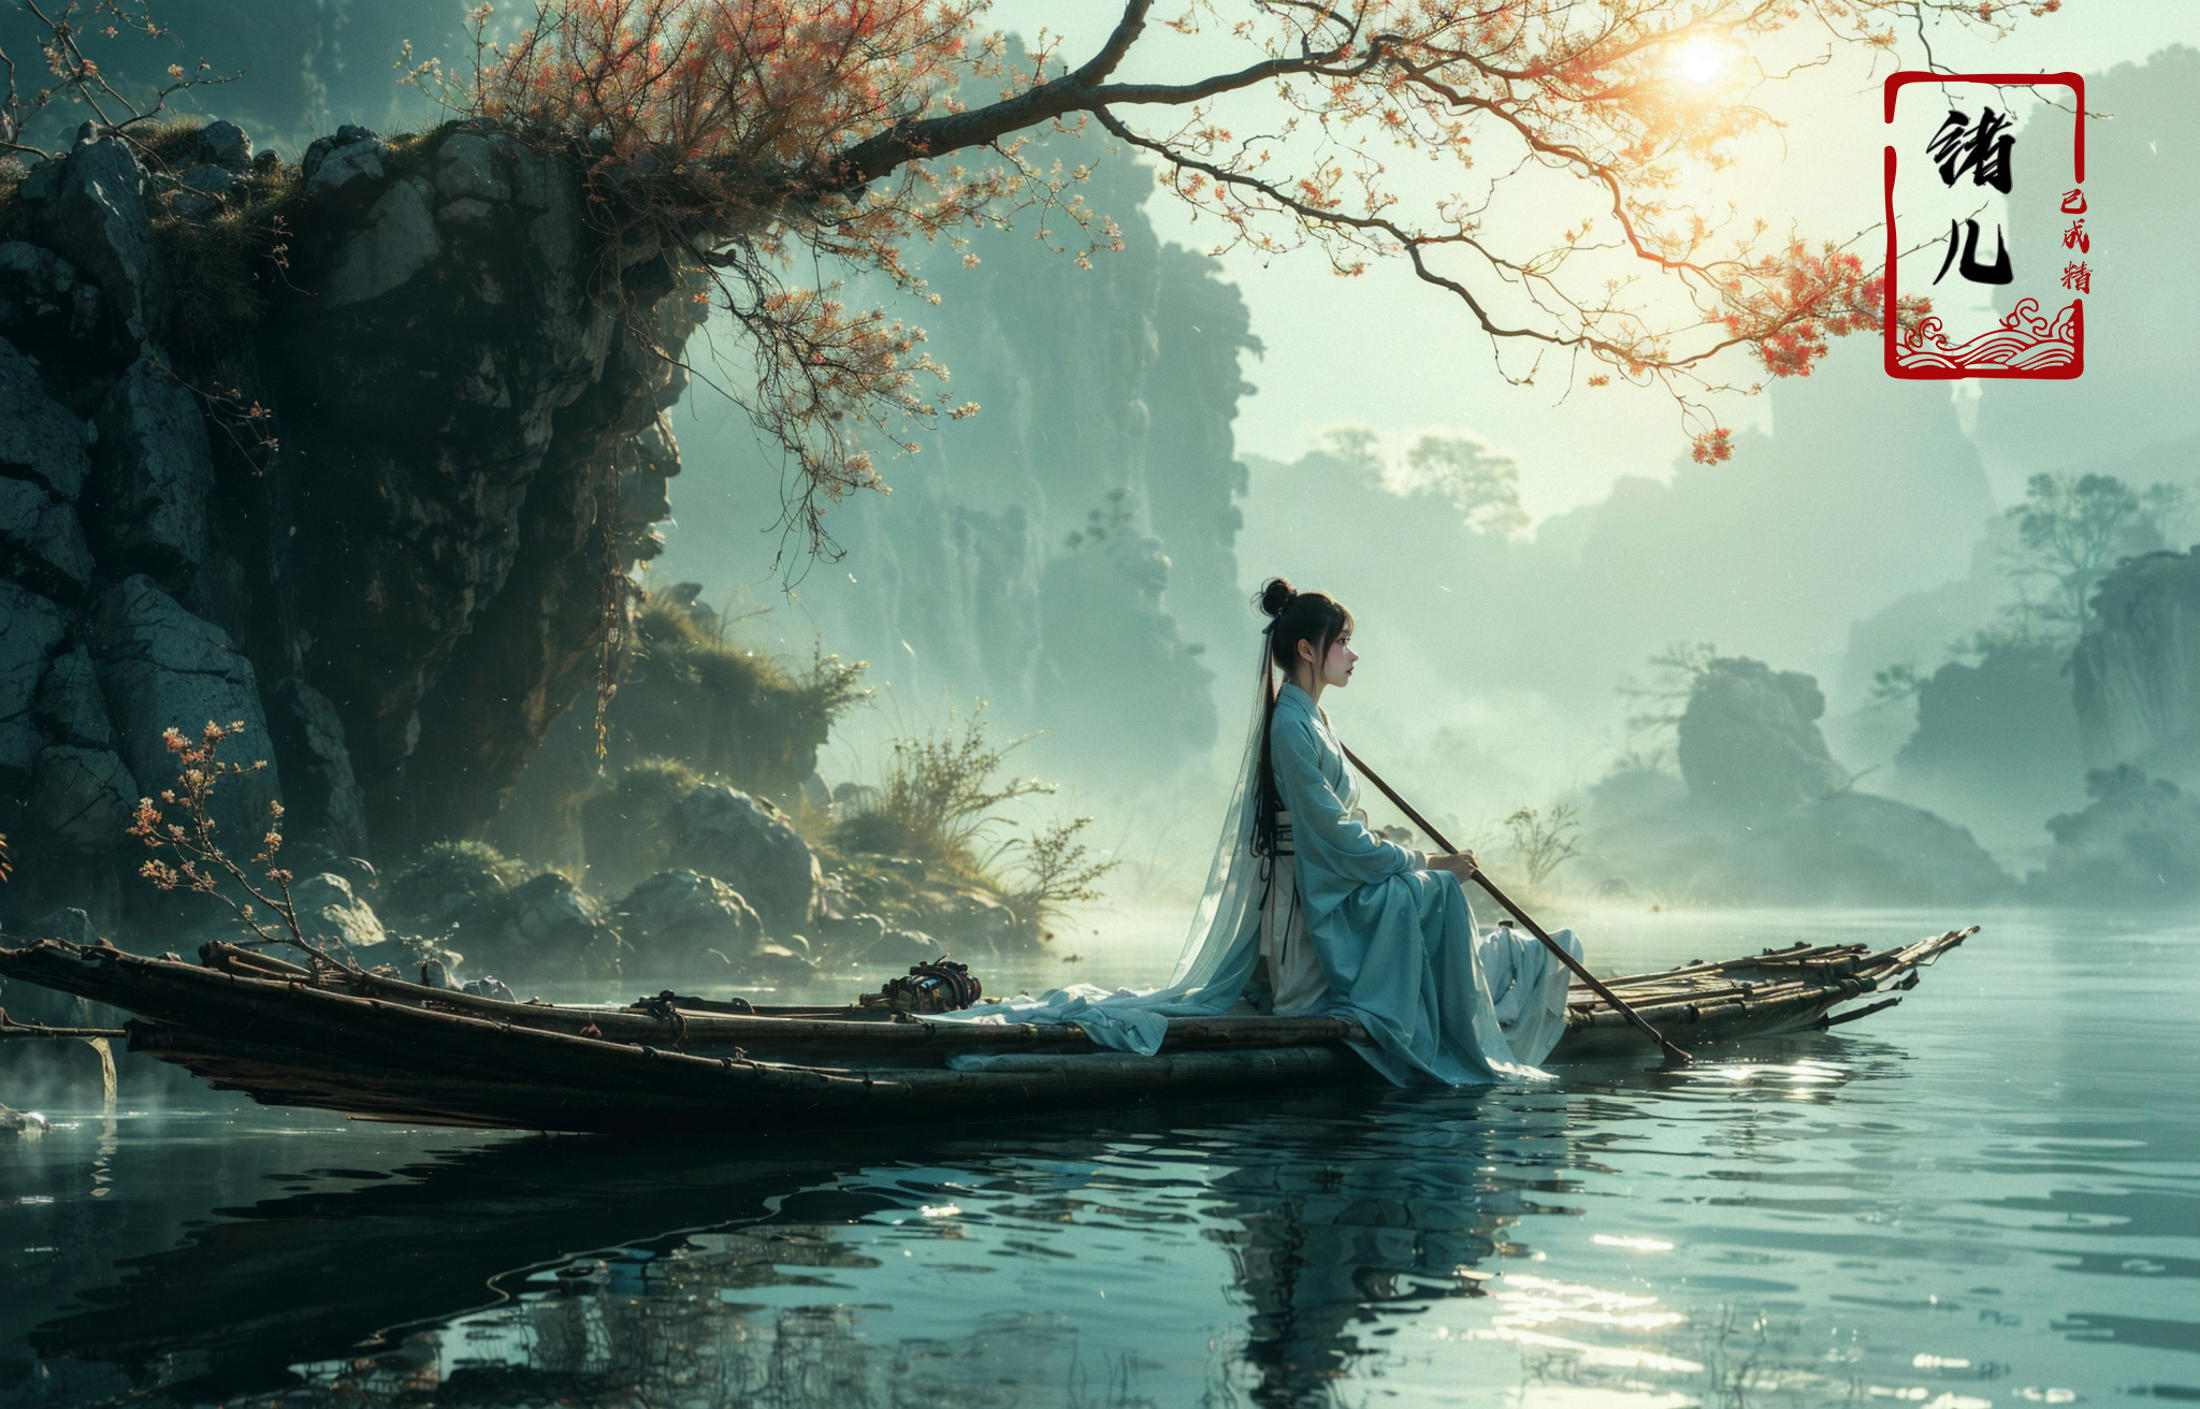 绪儿-山水渔夫 long raft with Landscape fisherman image by XRYCJ